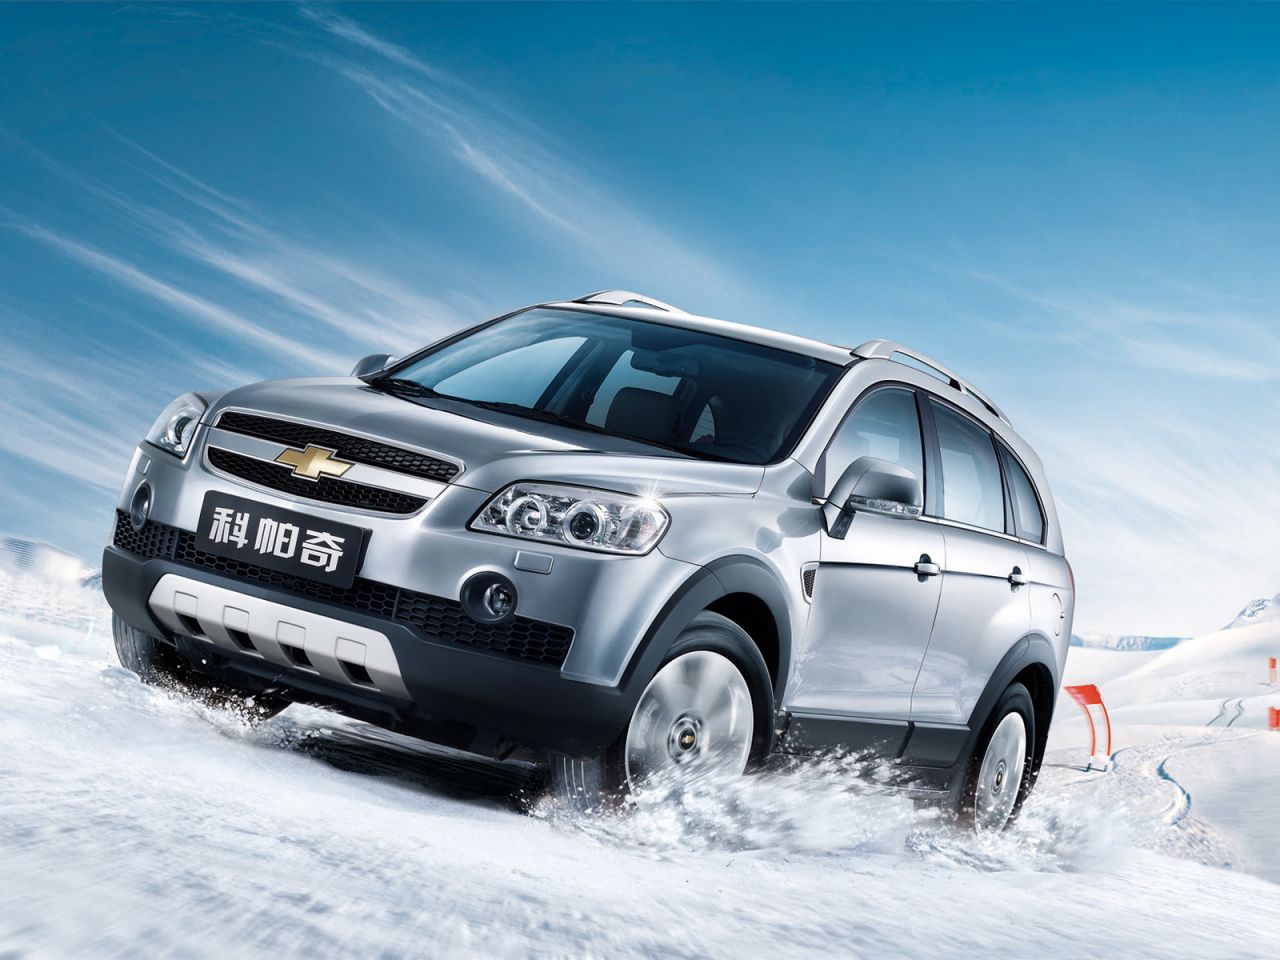 Chevrolet Captiva On Snow Wallpaper 1280x960